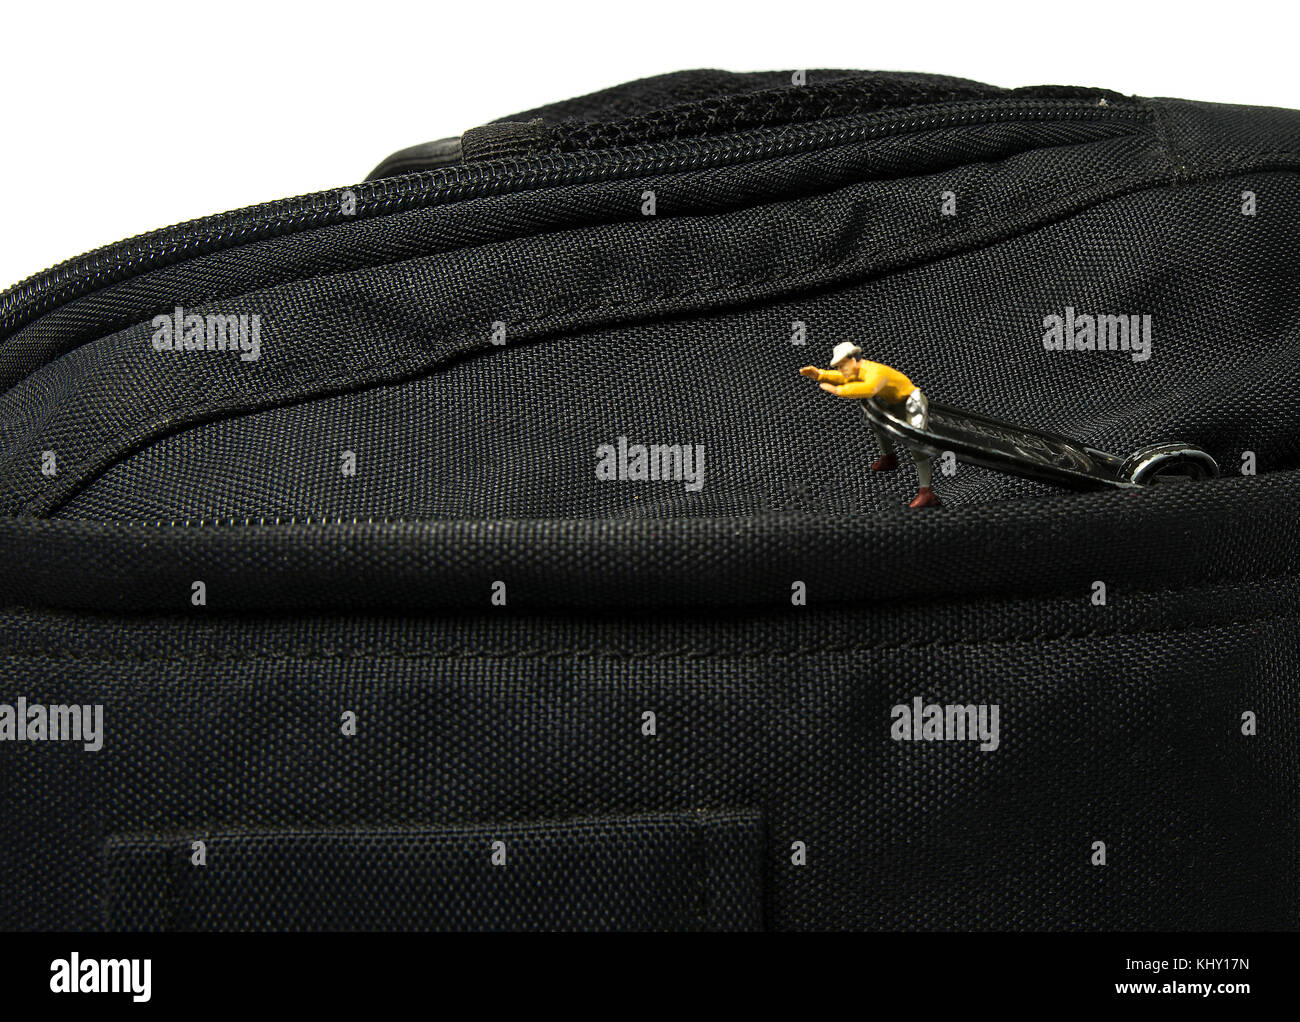 little miniature figure with zipper Stock Photo